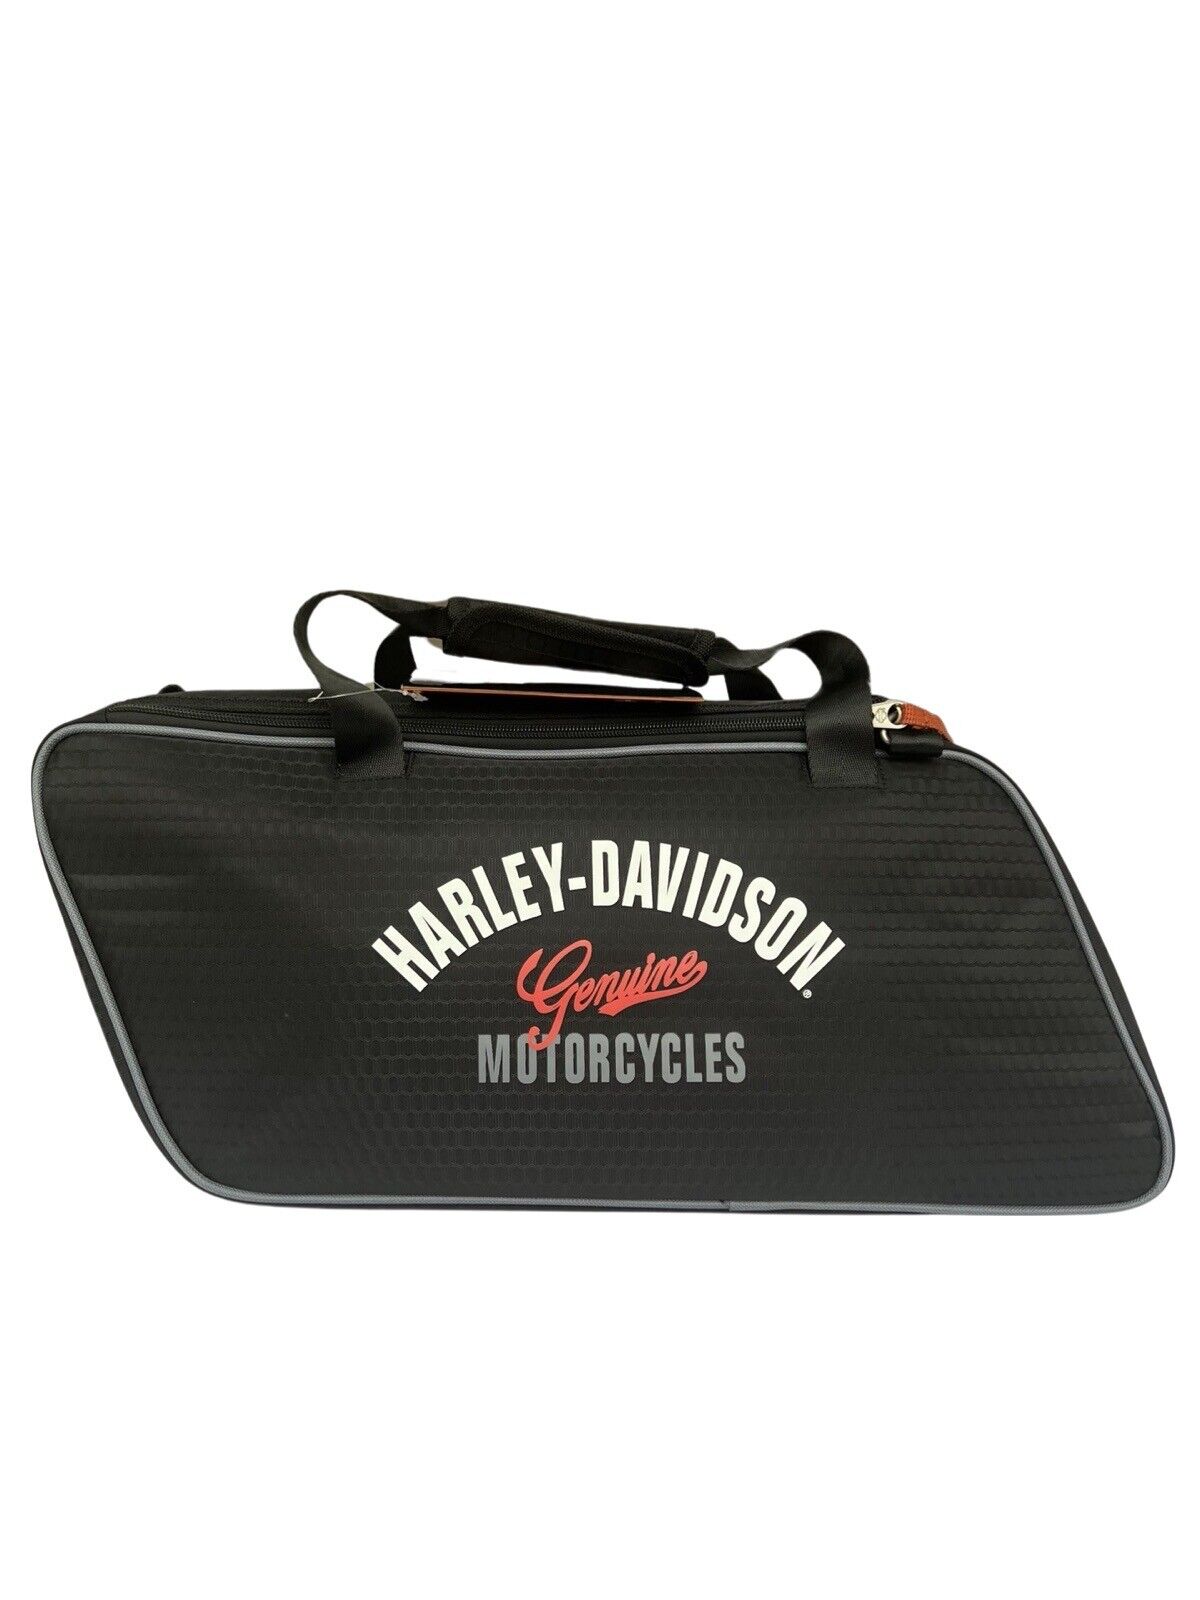 Harley Davidson Genuine Black Tour Pack Bag Brand New- Never Used